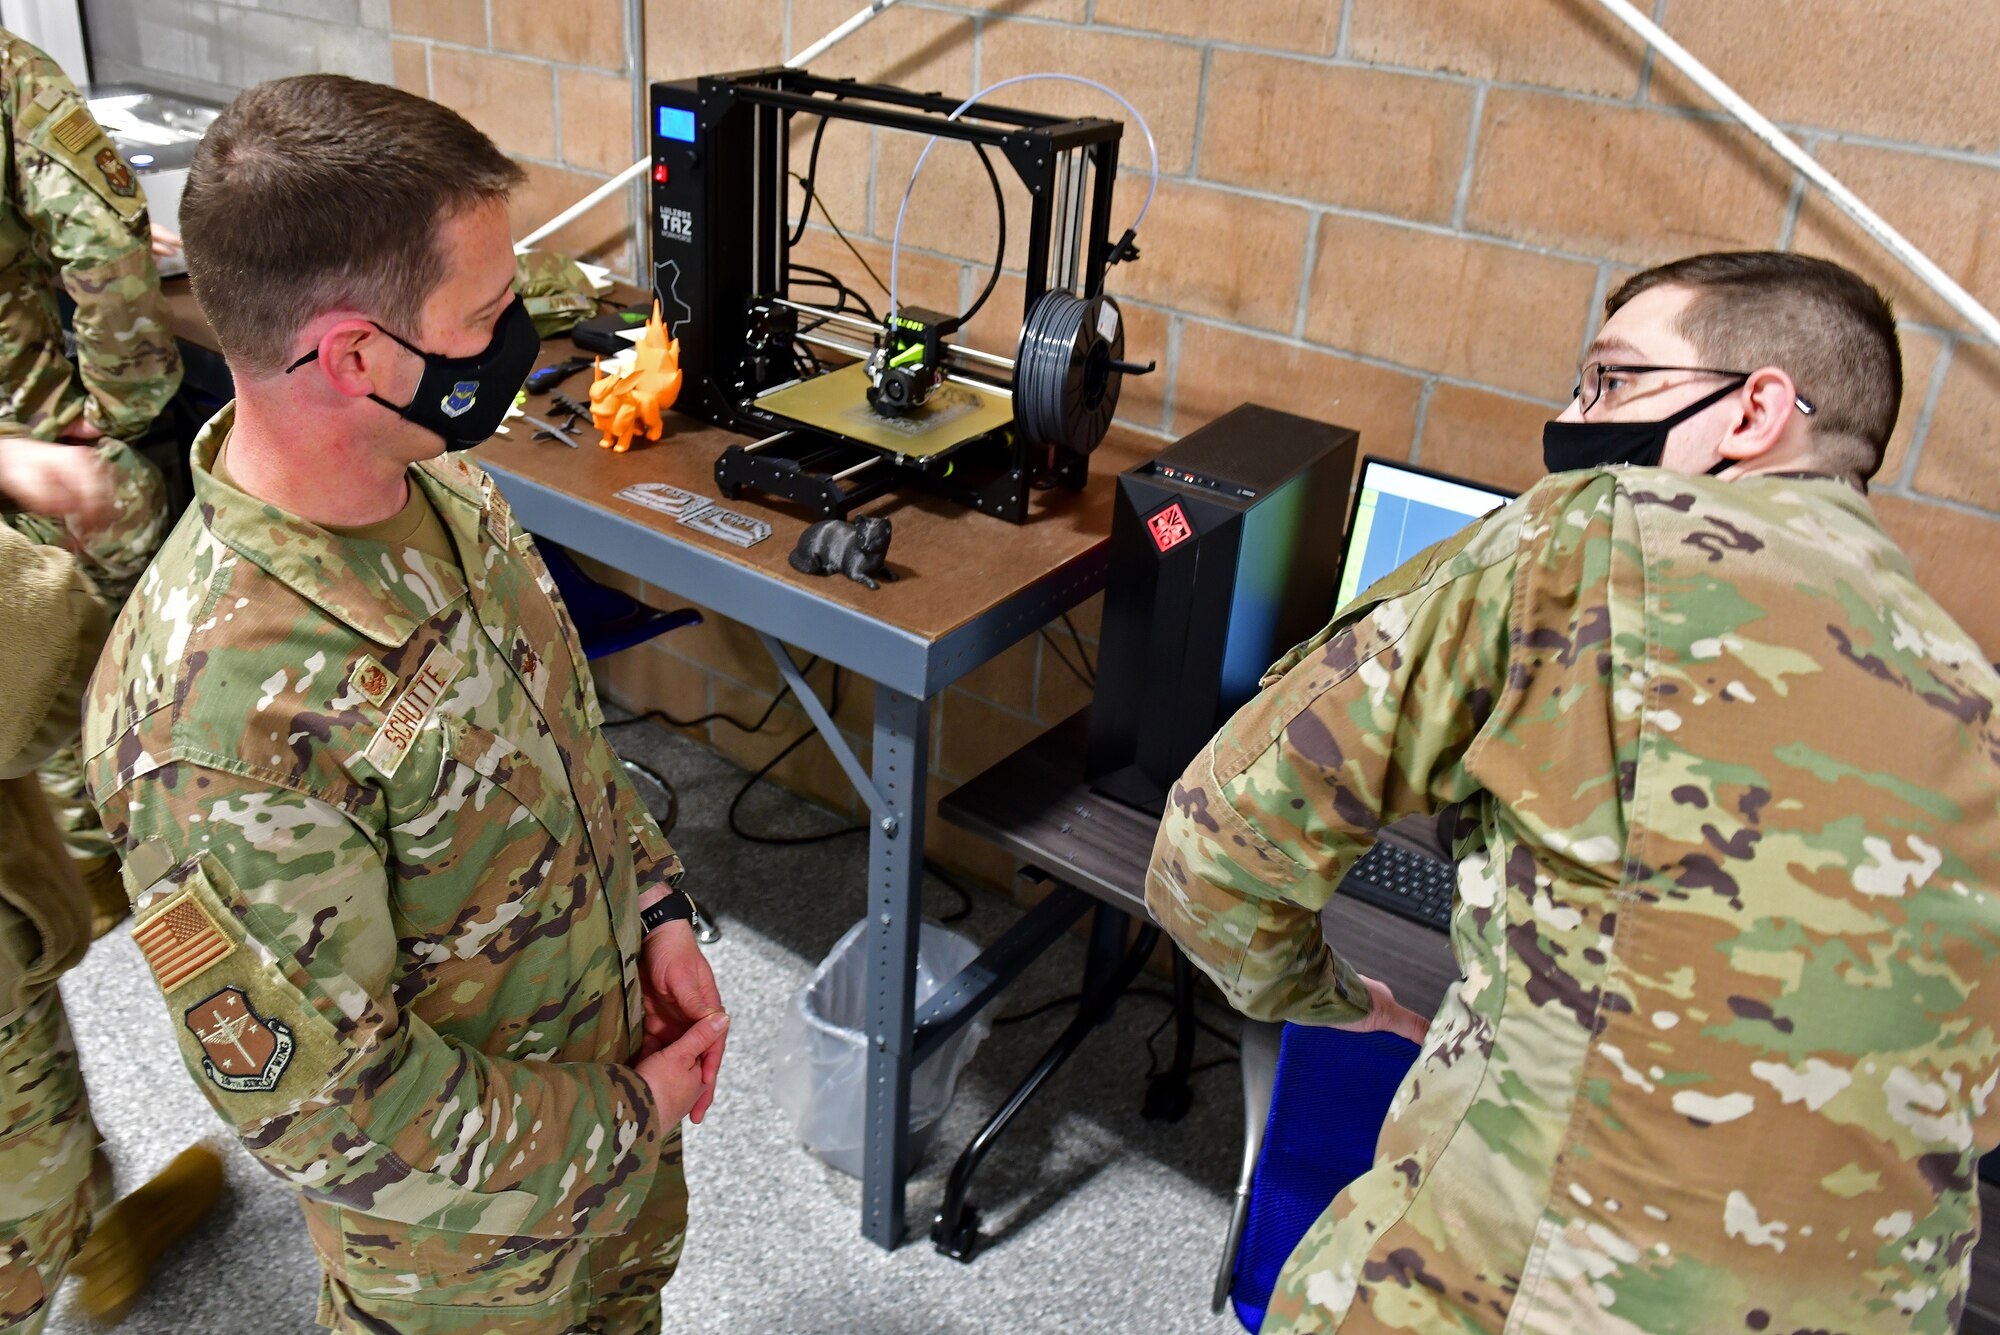 An Airman demonstrates a 3D printer